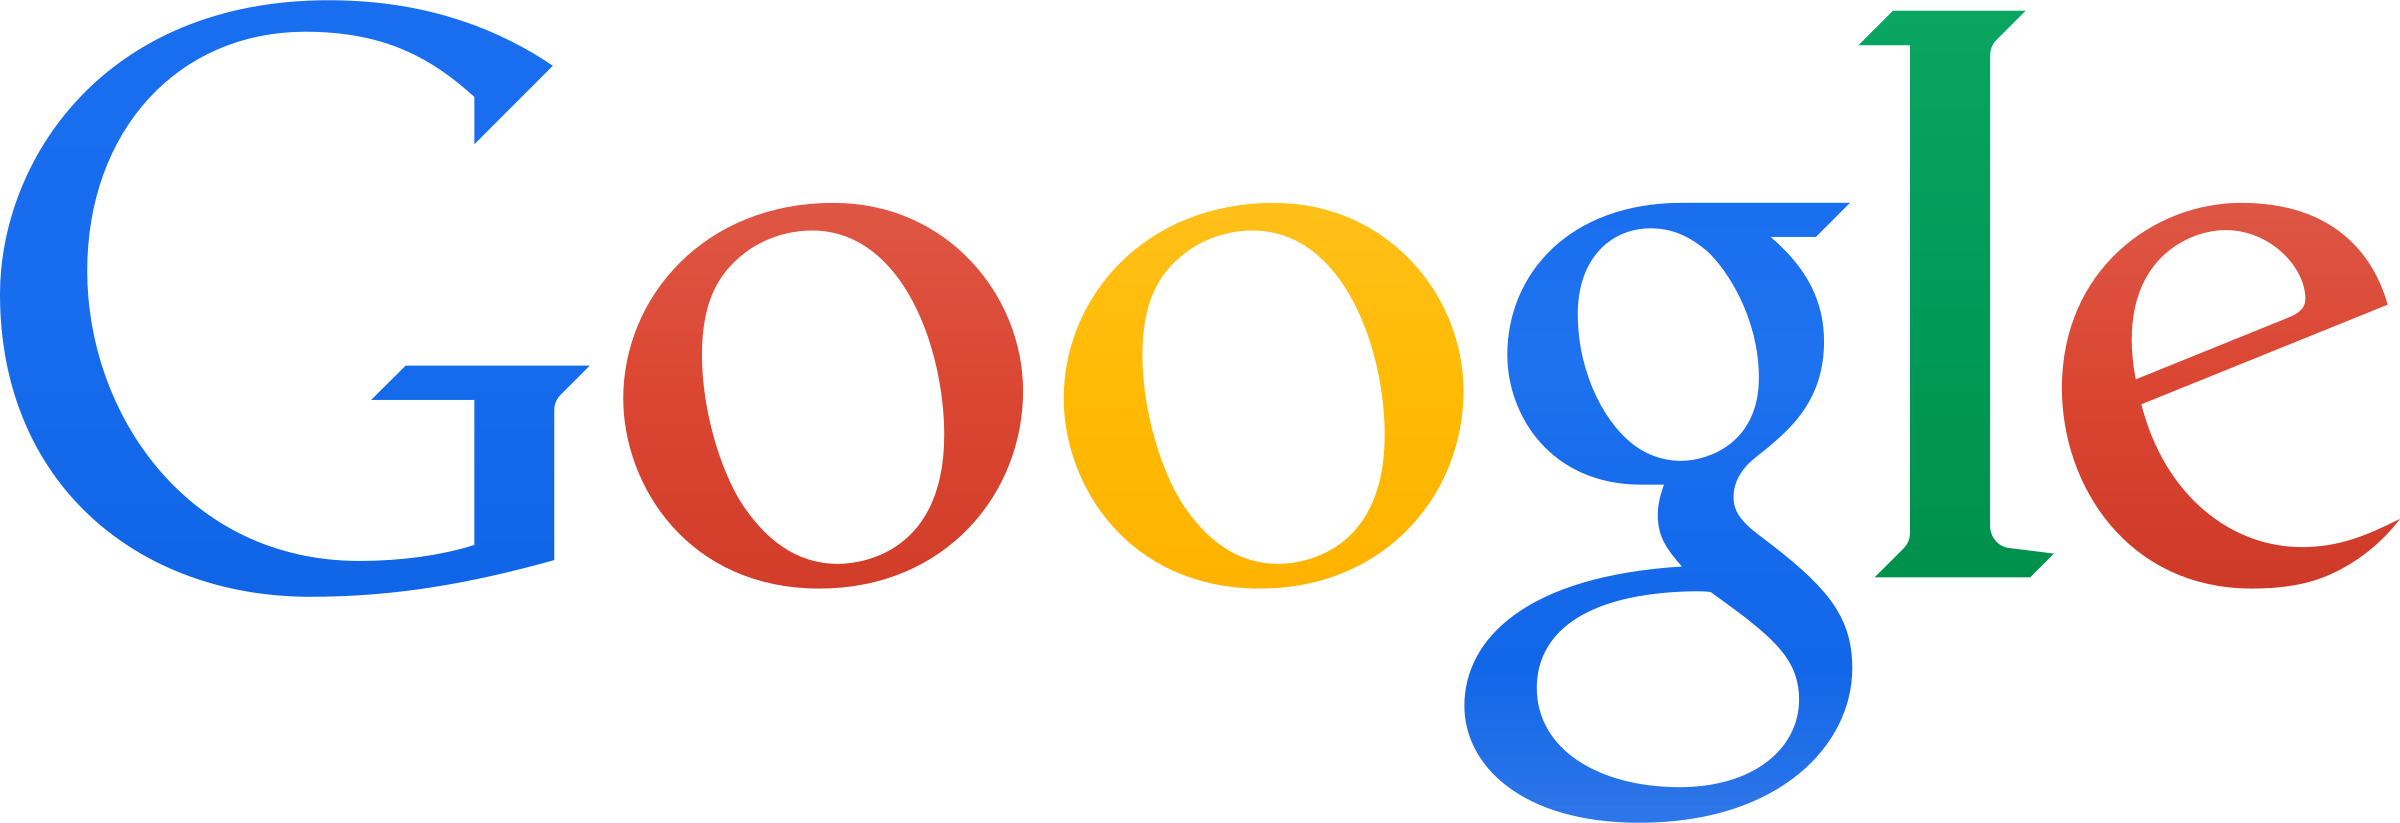 google-1-1-logo-png-transparent.png